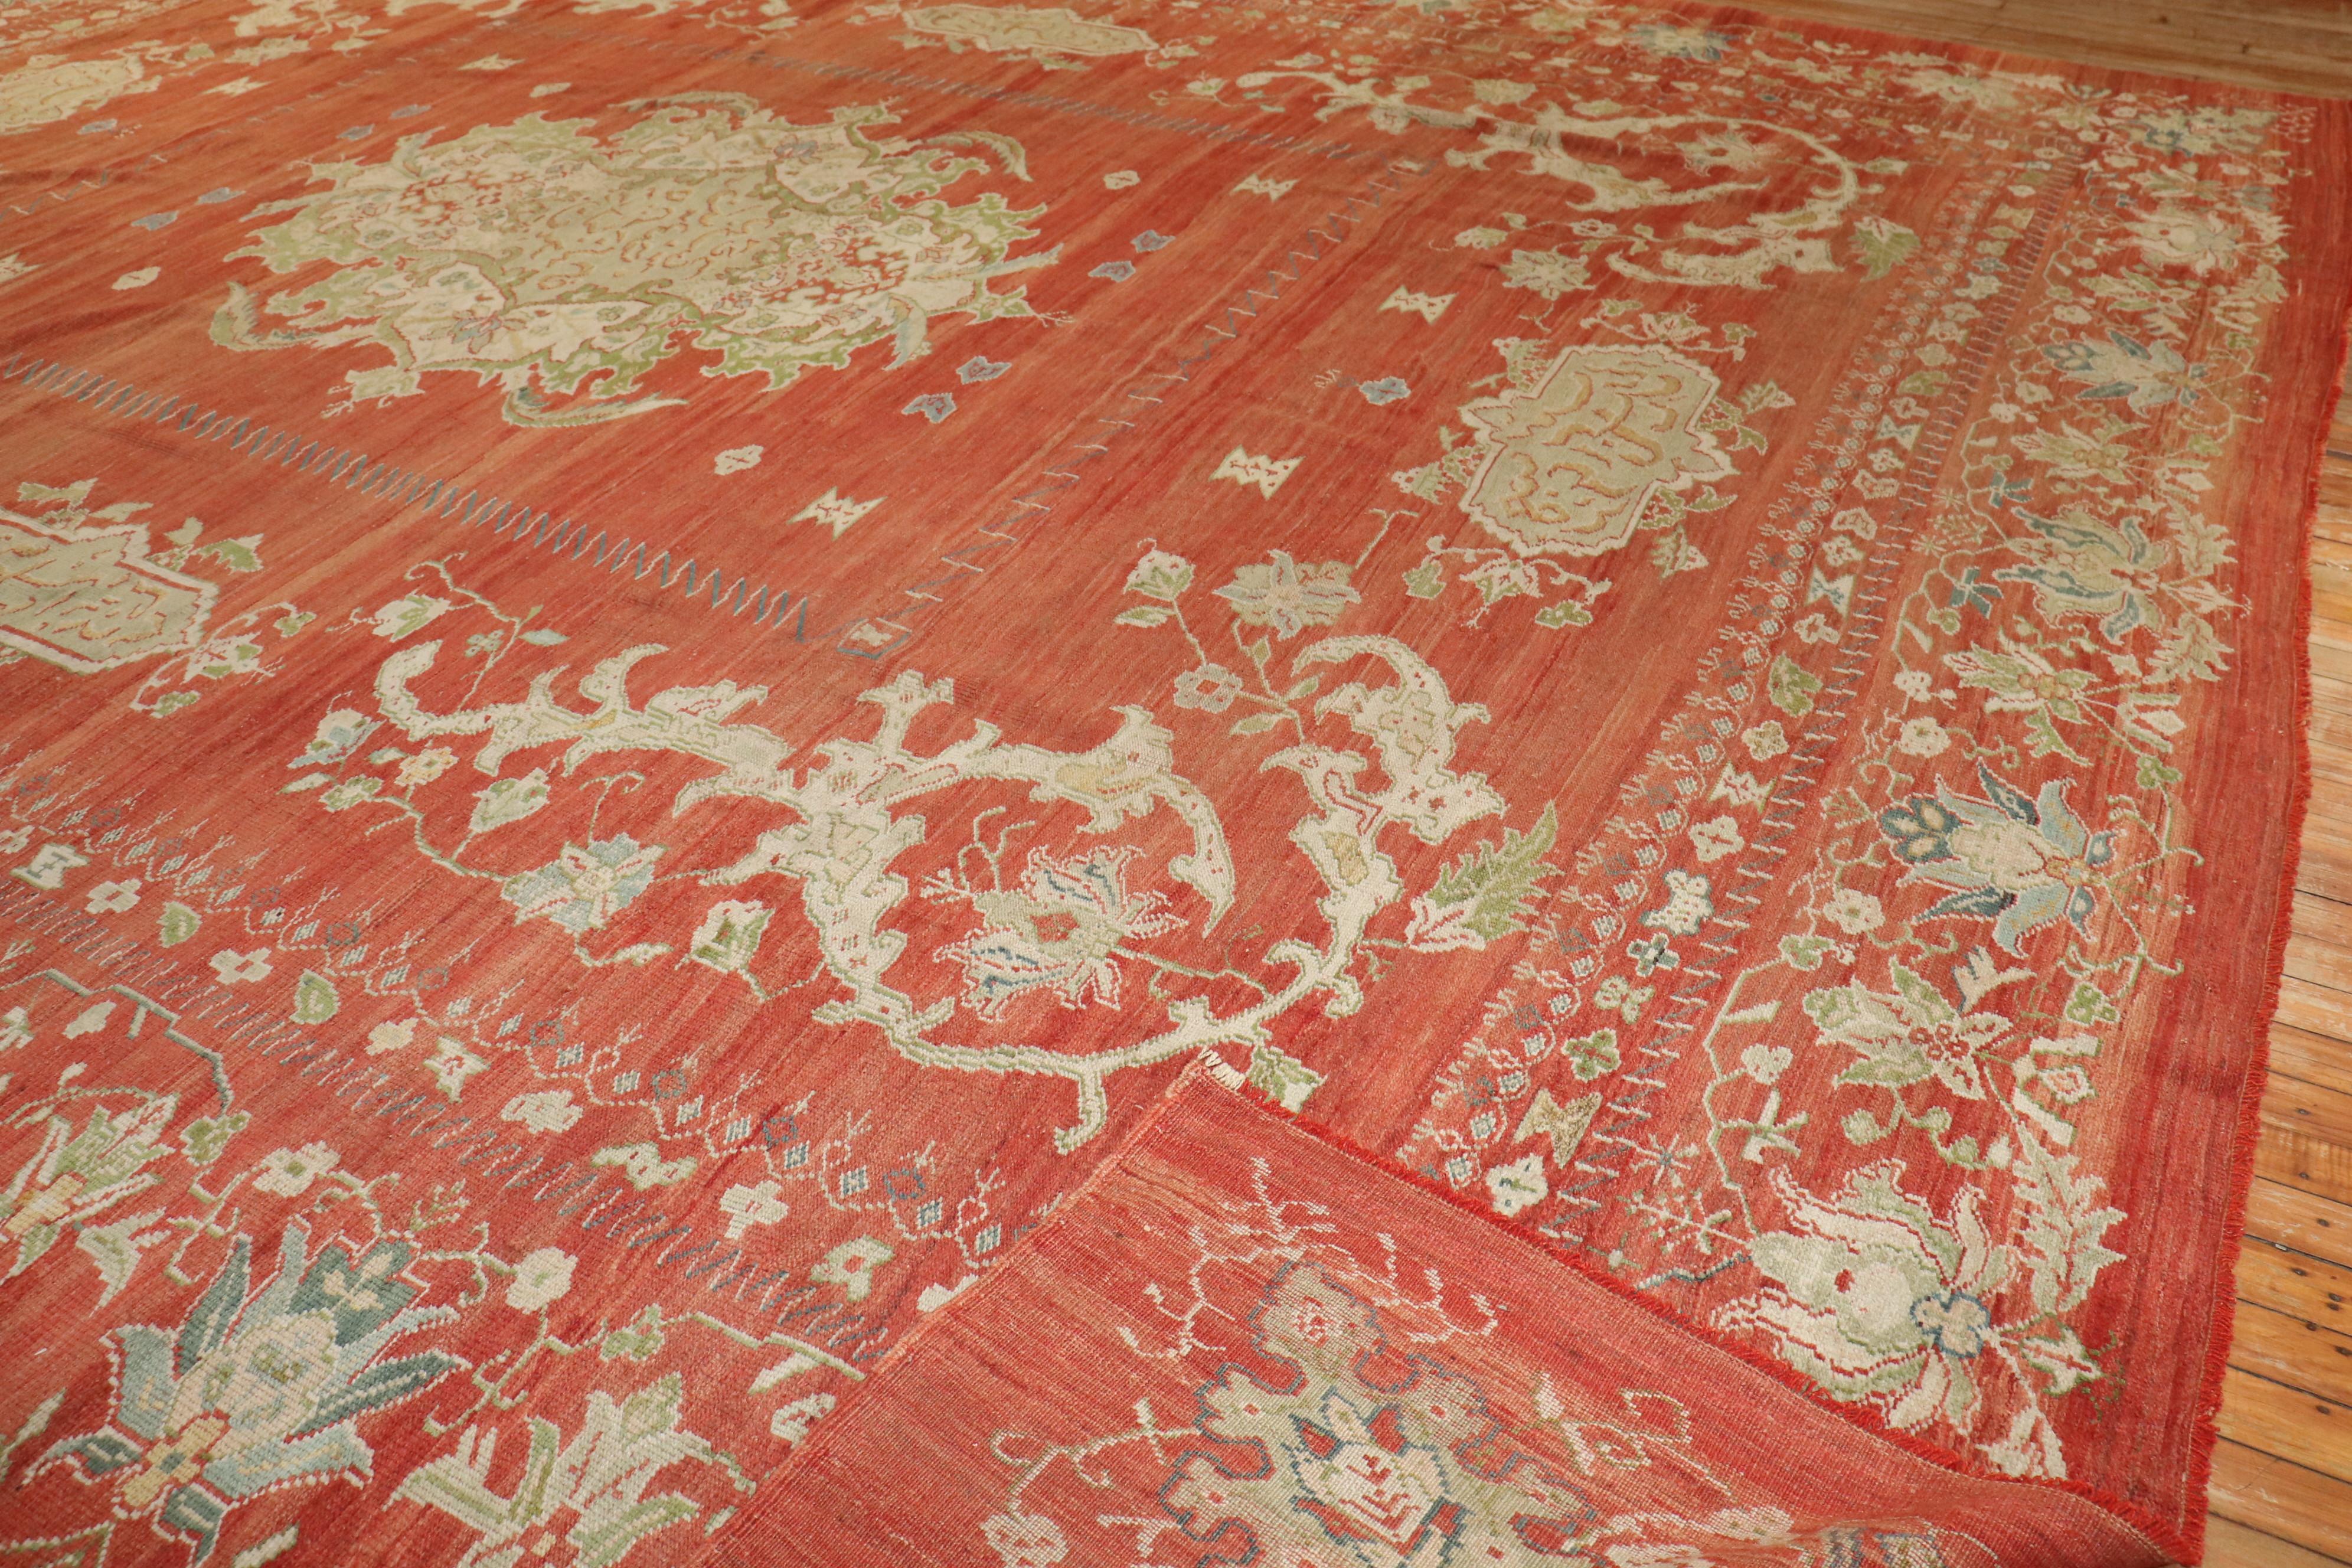 
Late 19th Century soft red antique turkish oushak large rug

Details
rug no.	j3123
size	12' x 14' (366 x 427 cm)